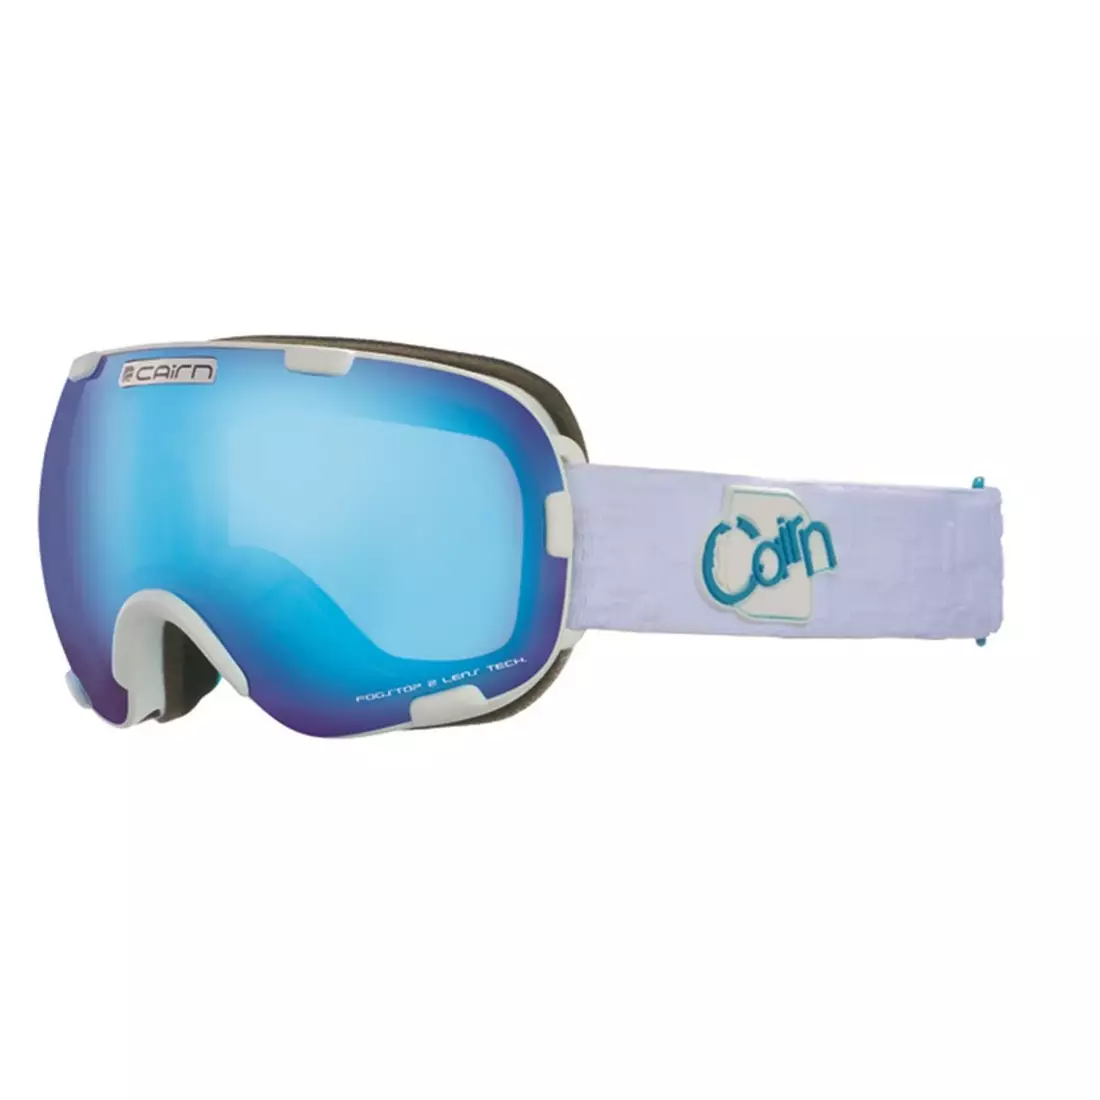 CAIRN lyžiarske/snowboardové okuliare SPIRIT light blue 5806818201